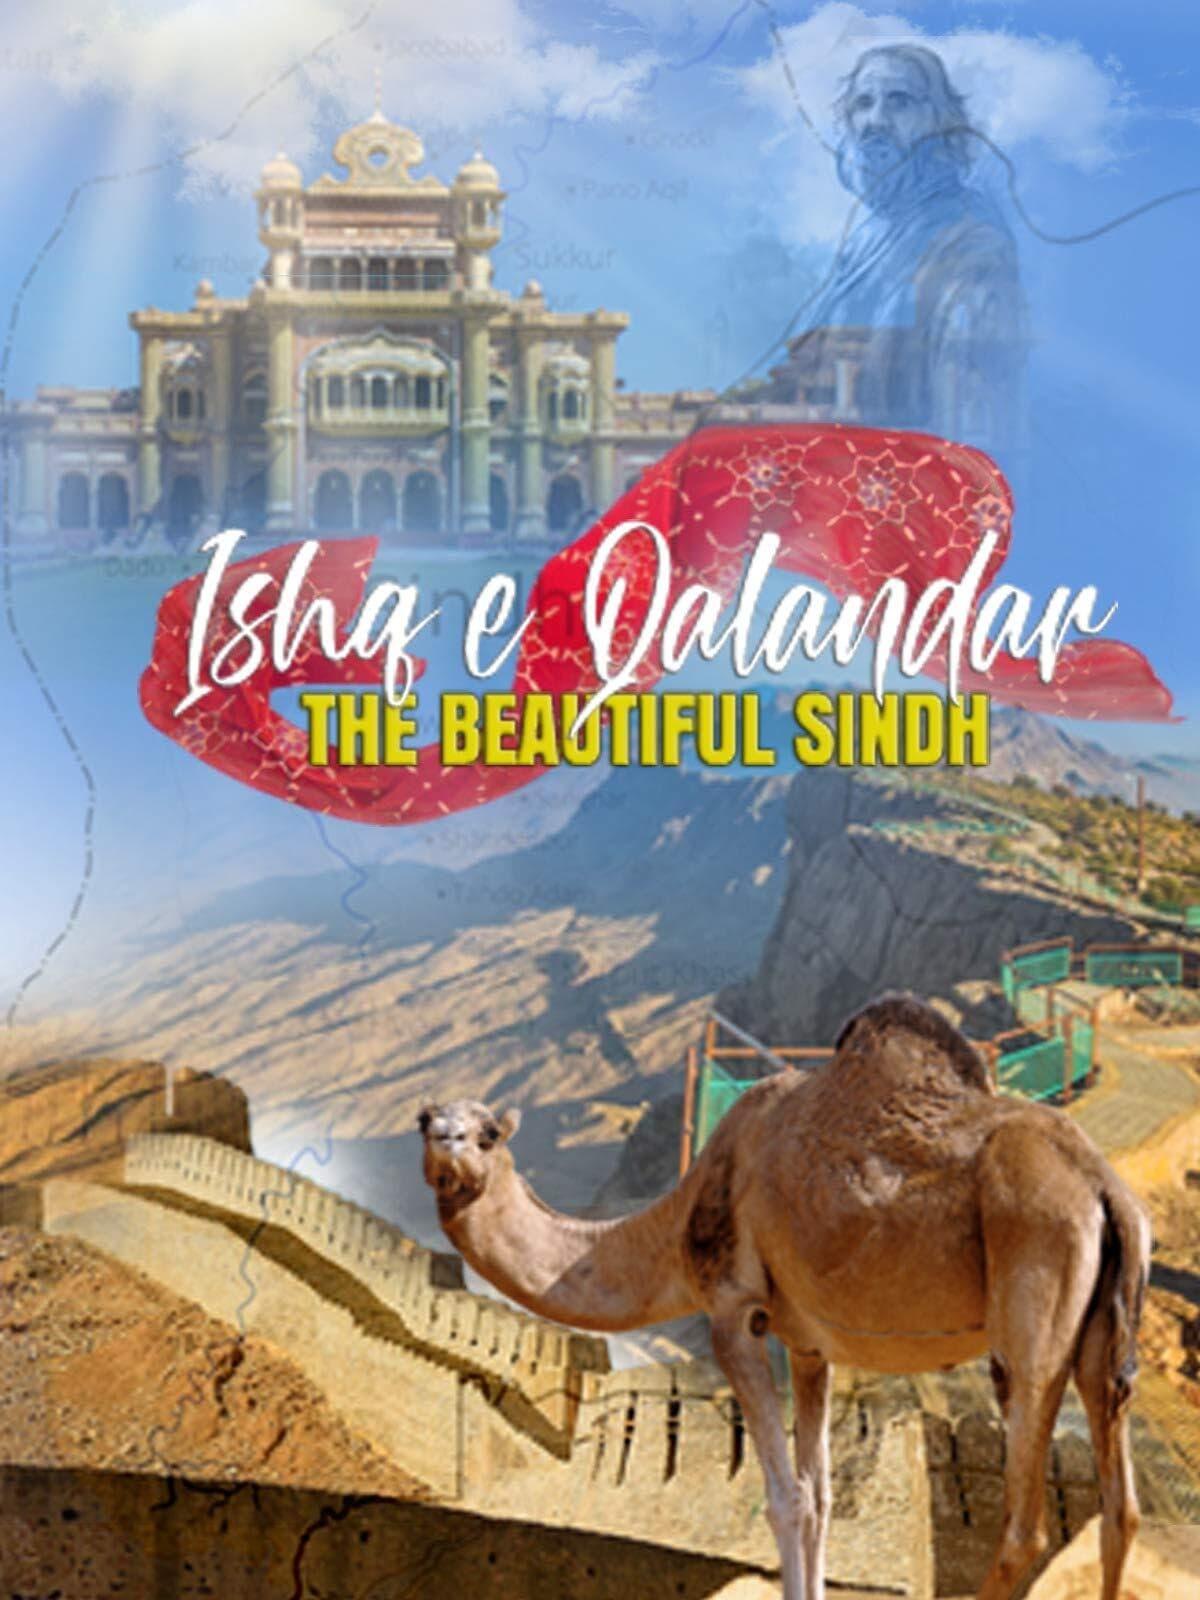 Ishq e Qalandar - The Beautiful Sindh poster